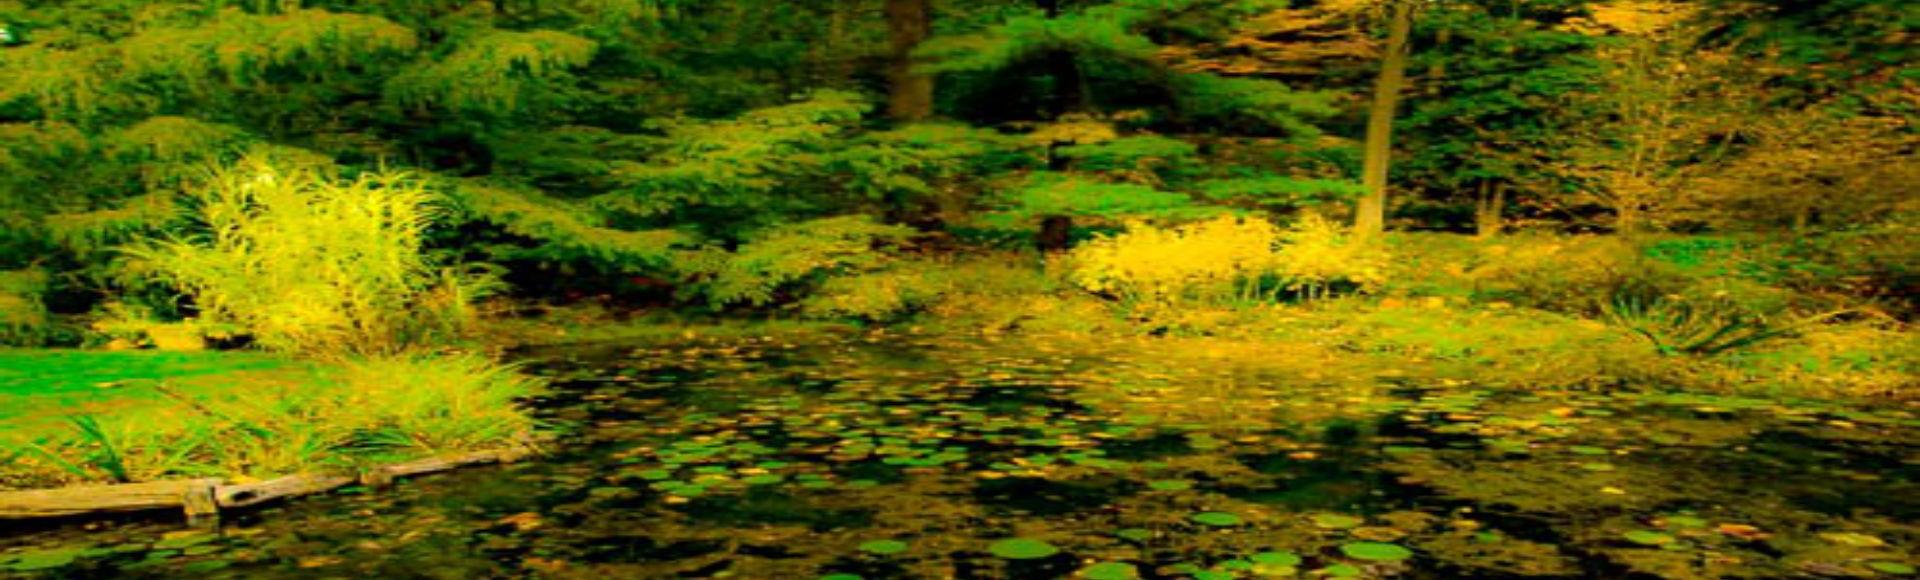 WEBSITE - Water Lillies - Buck Garden - Copy - Copy